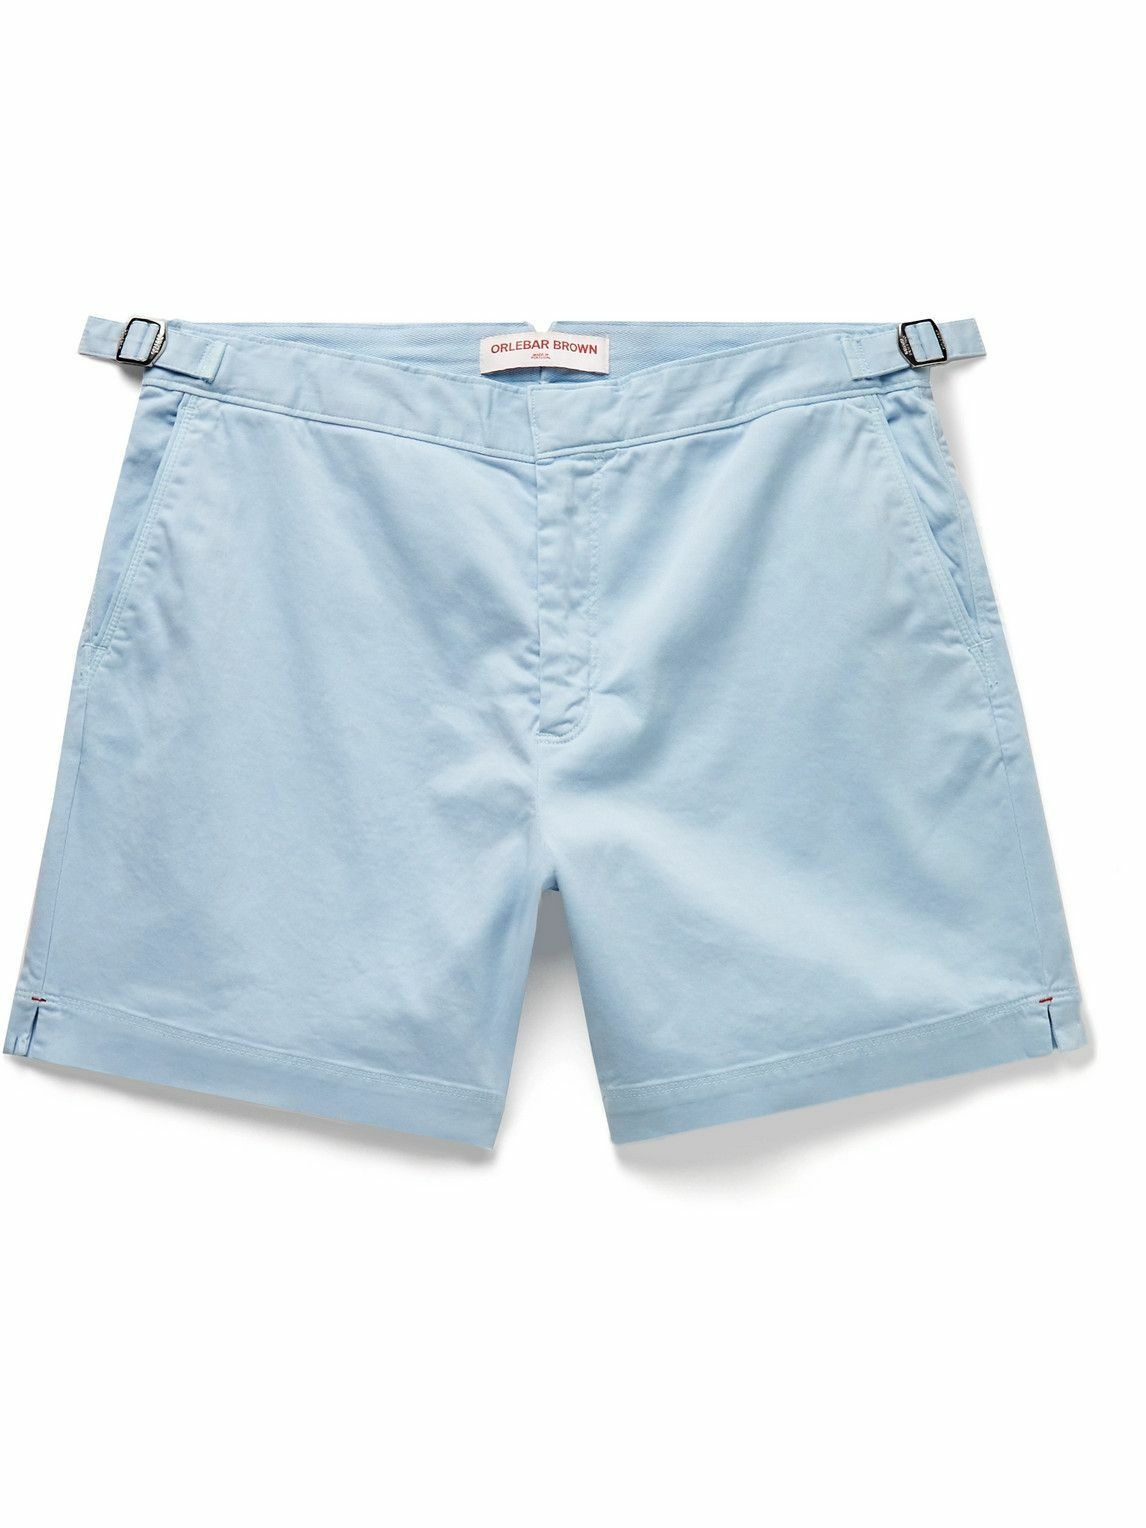 Orlebar Brown - Bulldog Slim-Fit Cotton-Blend Twill Shorts - Blue ...